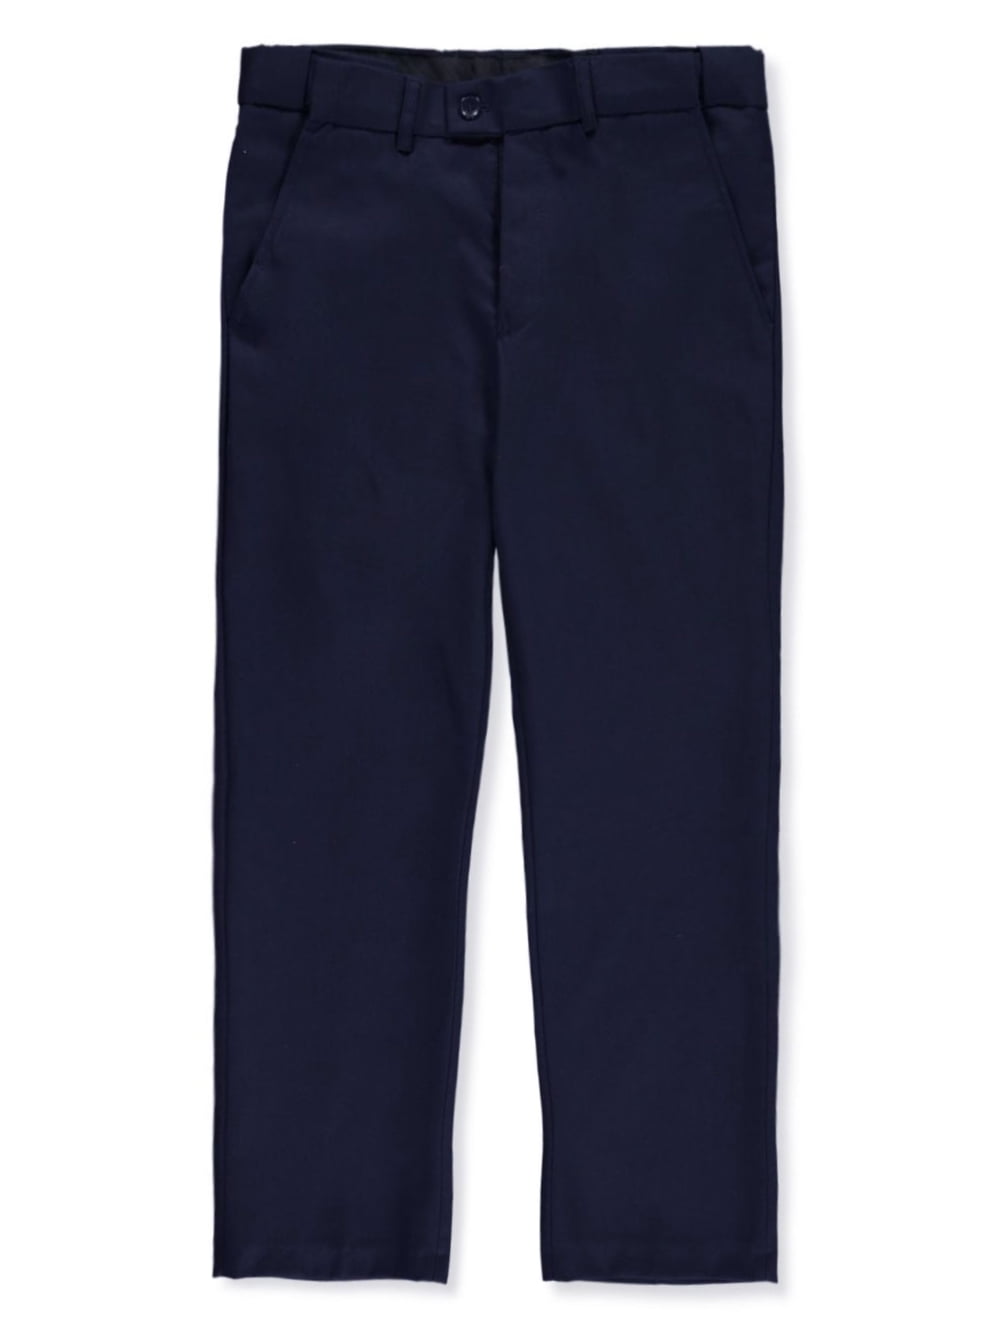 1880 Club Boys | GREG Trousers | Navy and Burgundy | Muiri K Boutique